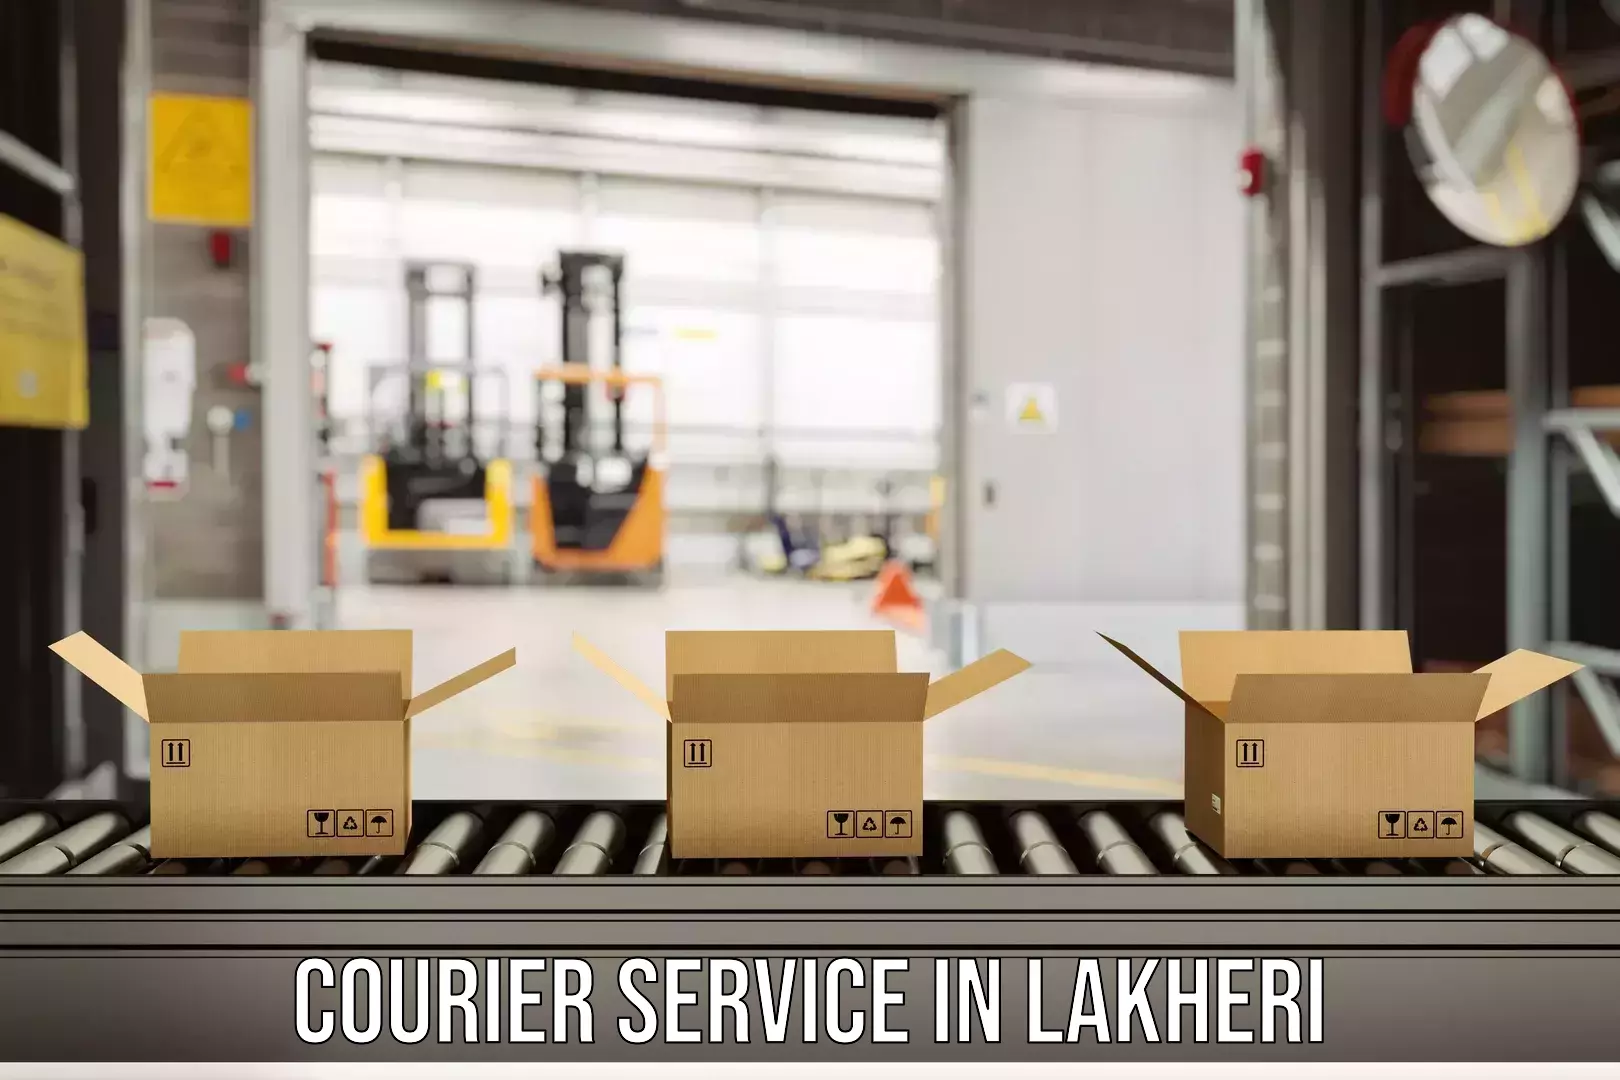 Courier service efficiency in Lakheri